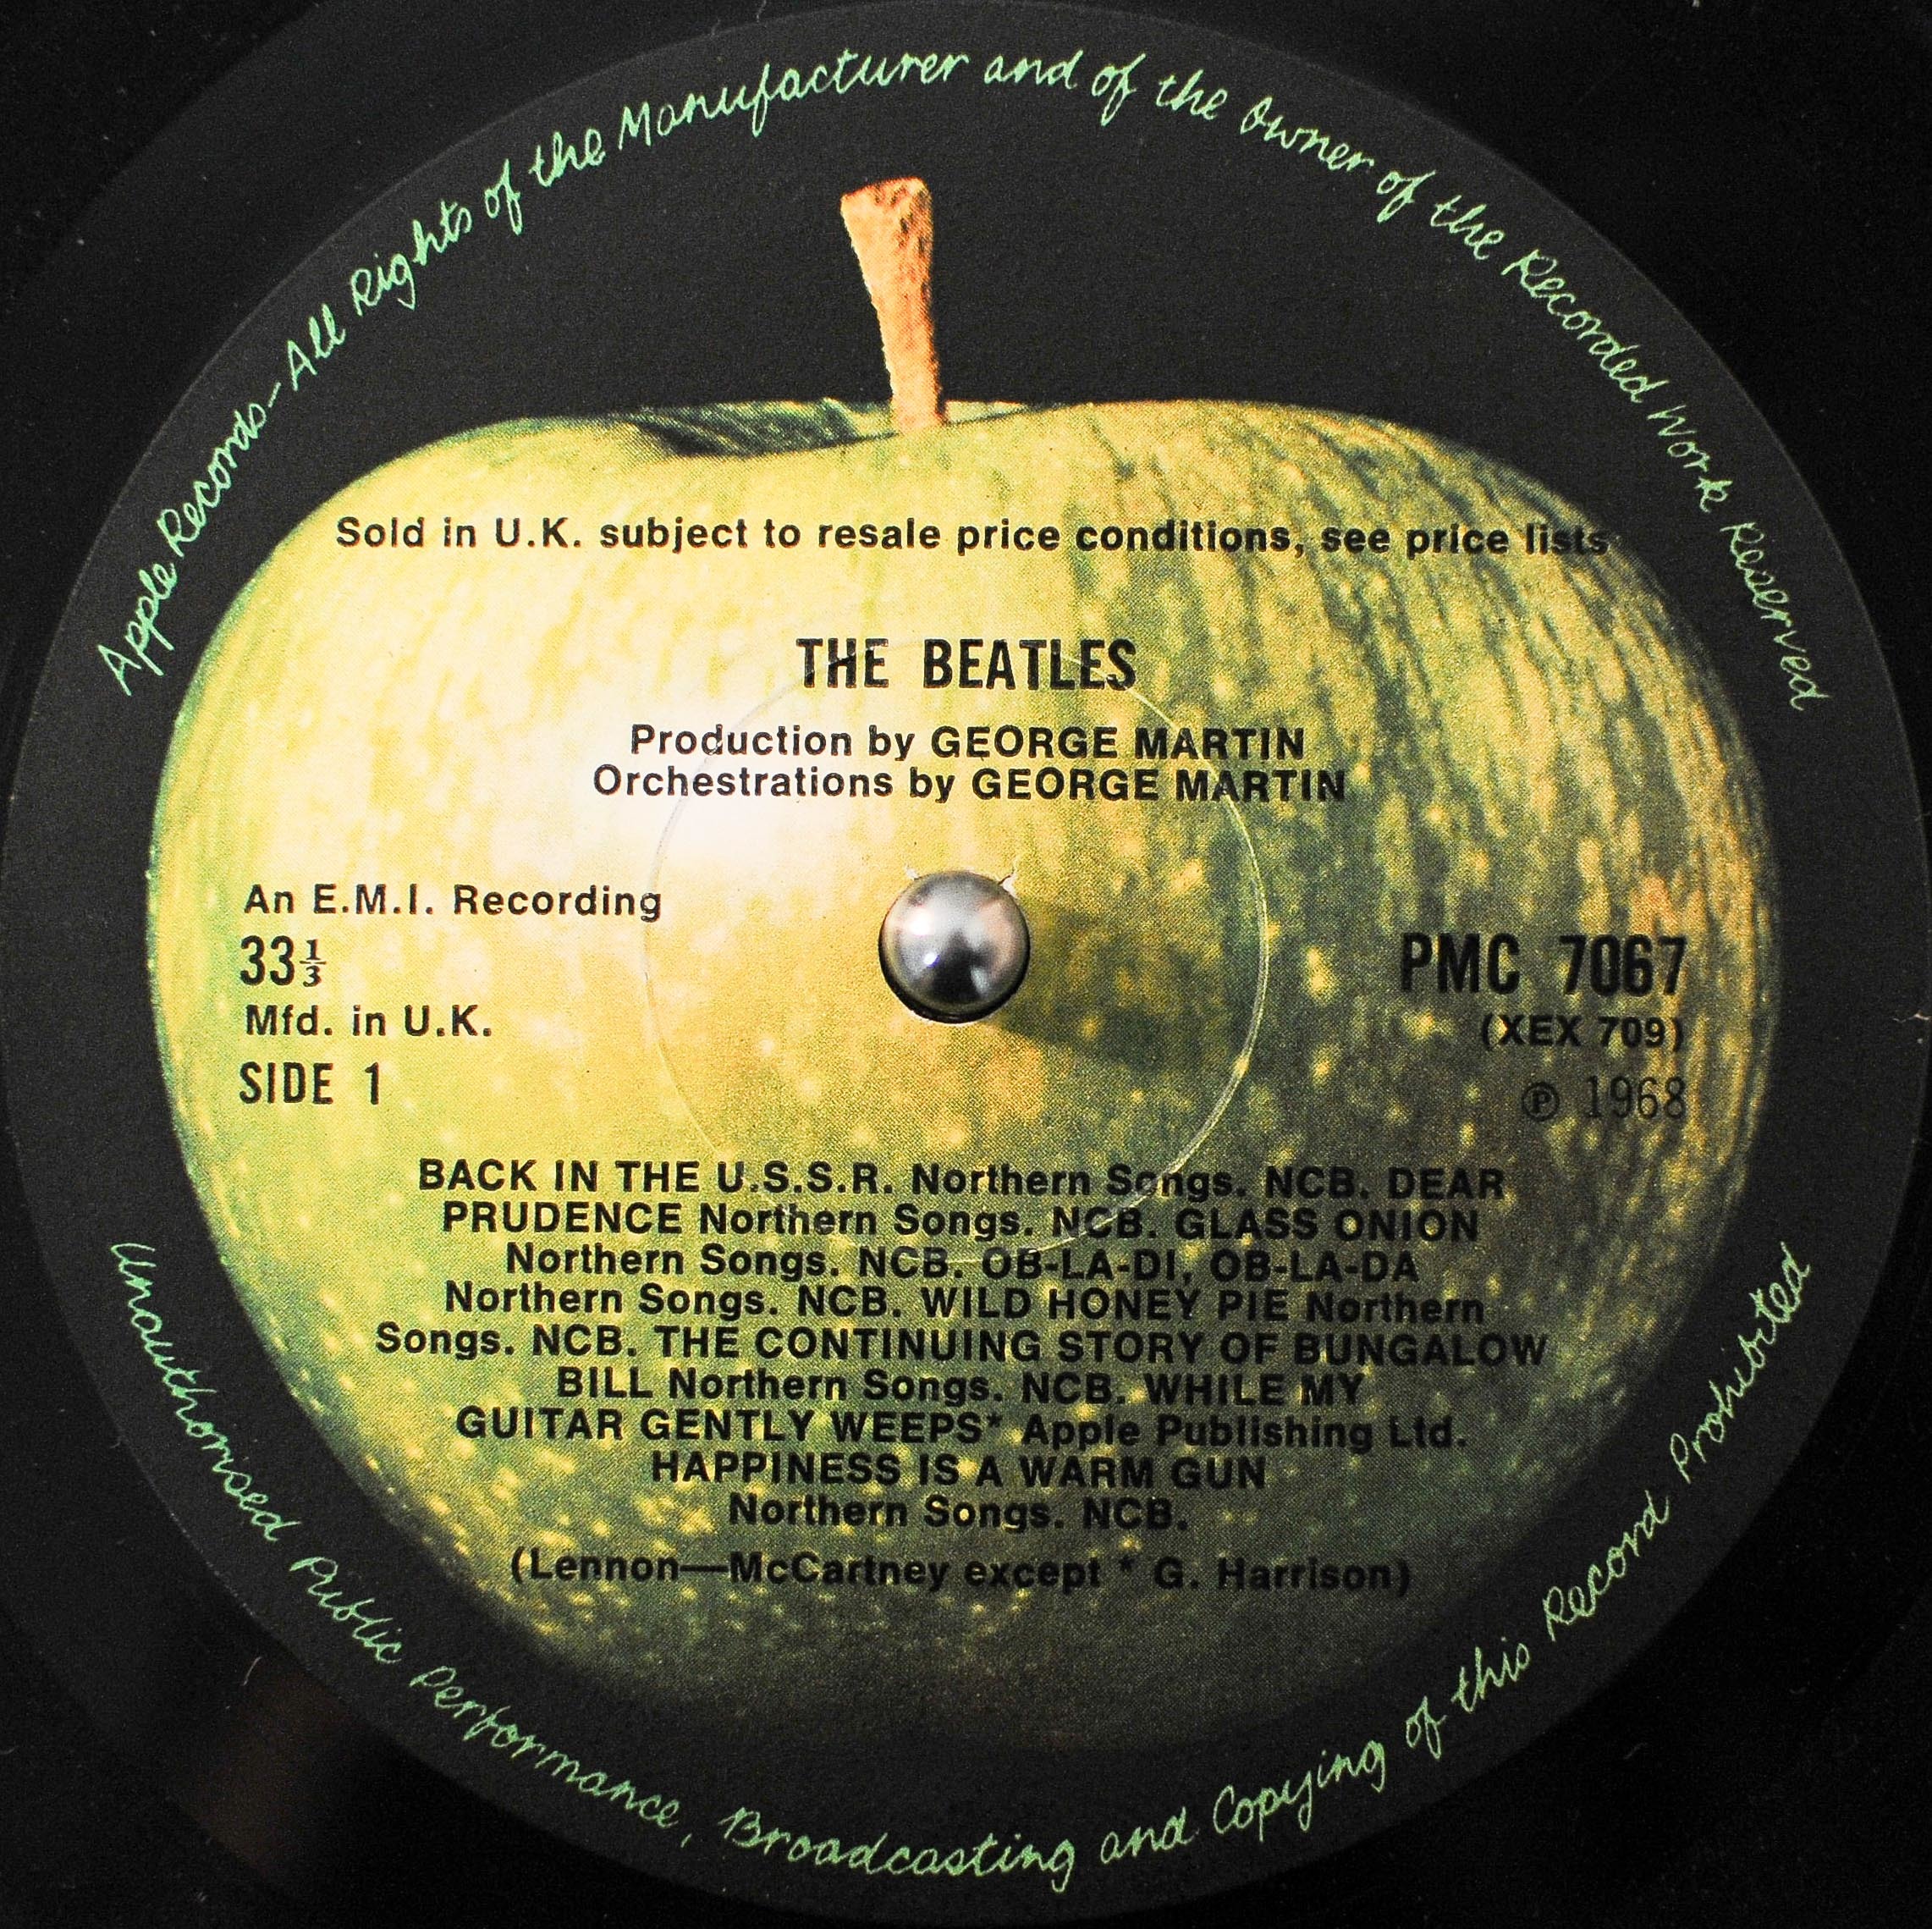 The Beatles - ホワイト・アルバム UK mono盤 - The Beatles